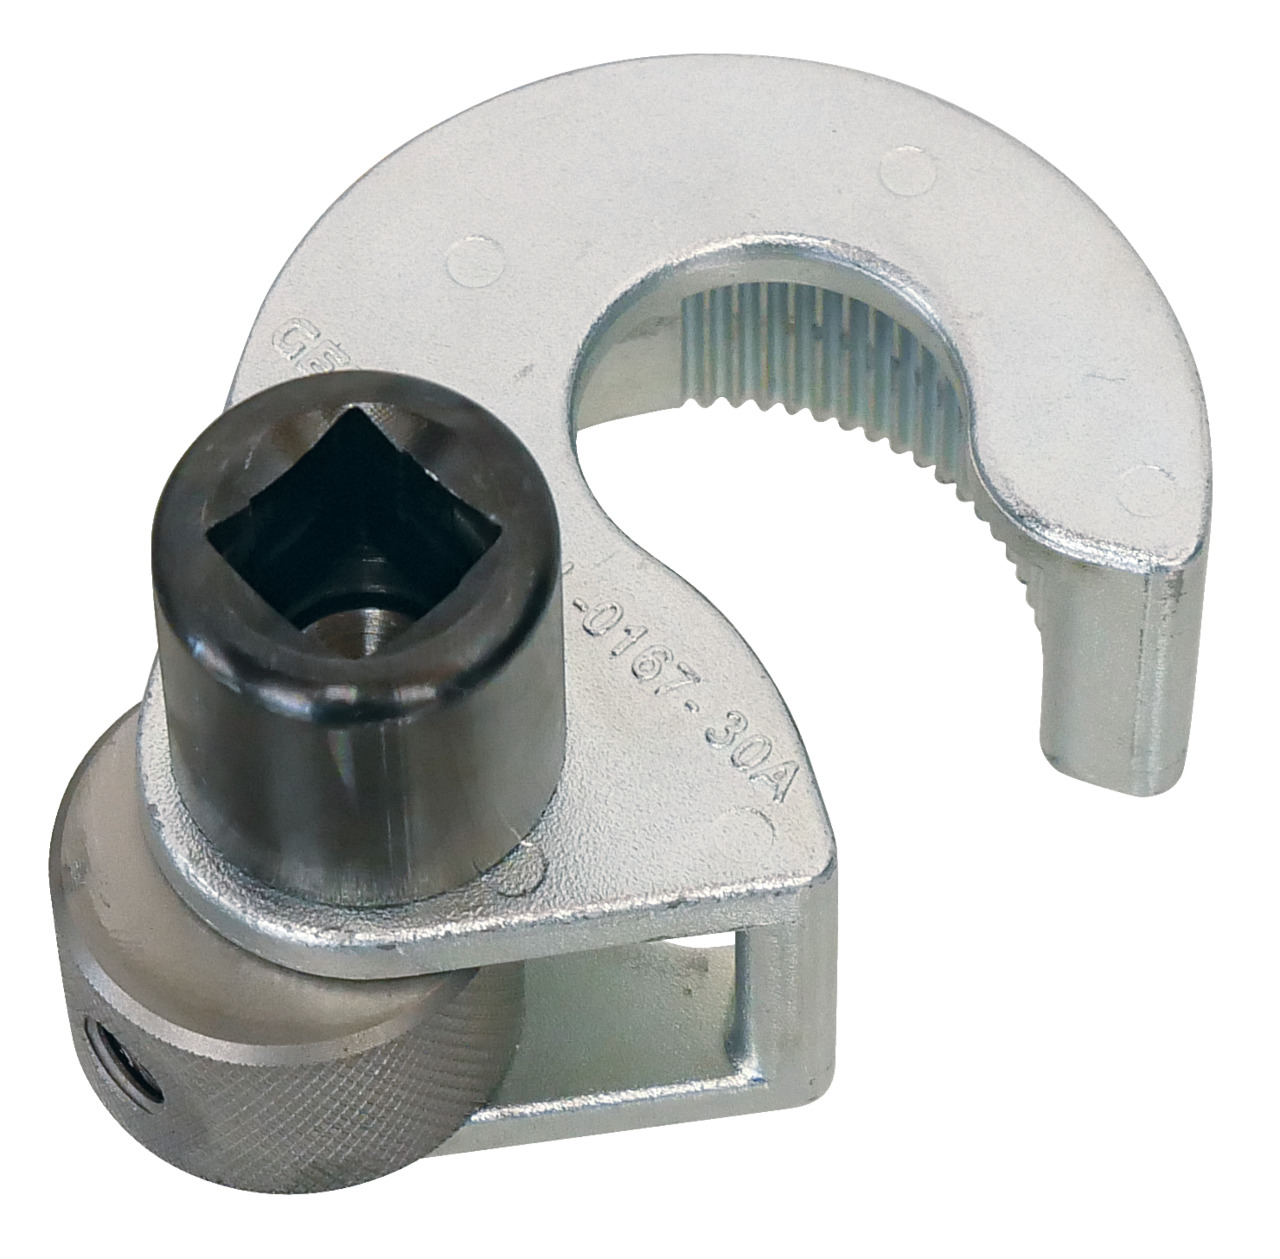 Exzenterschlüssel für Inneres-Spurstangengelenk, Ø 30 - 43 mm (KL-0167-30 A)